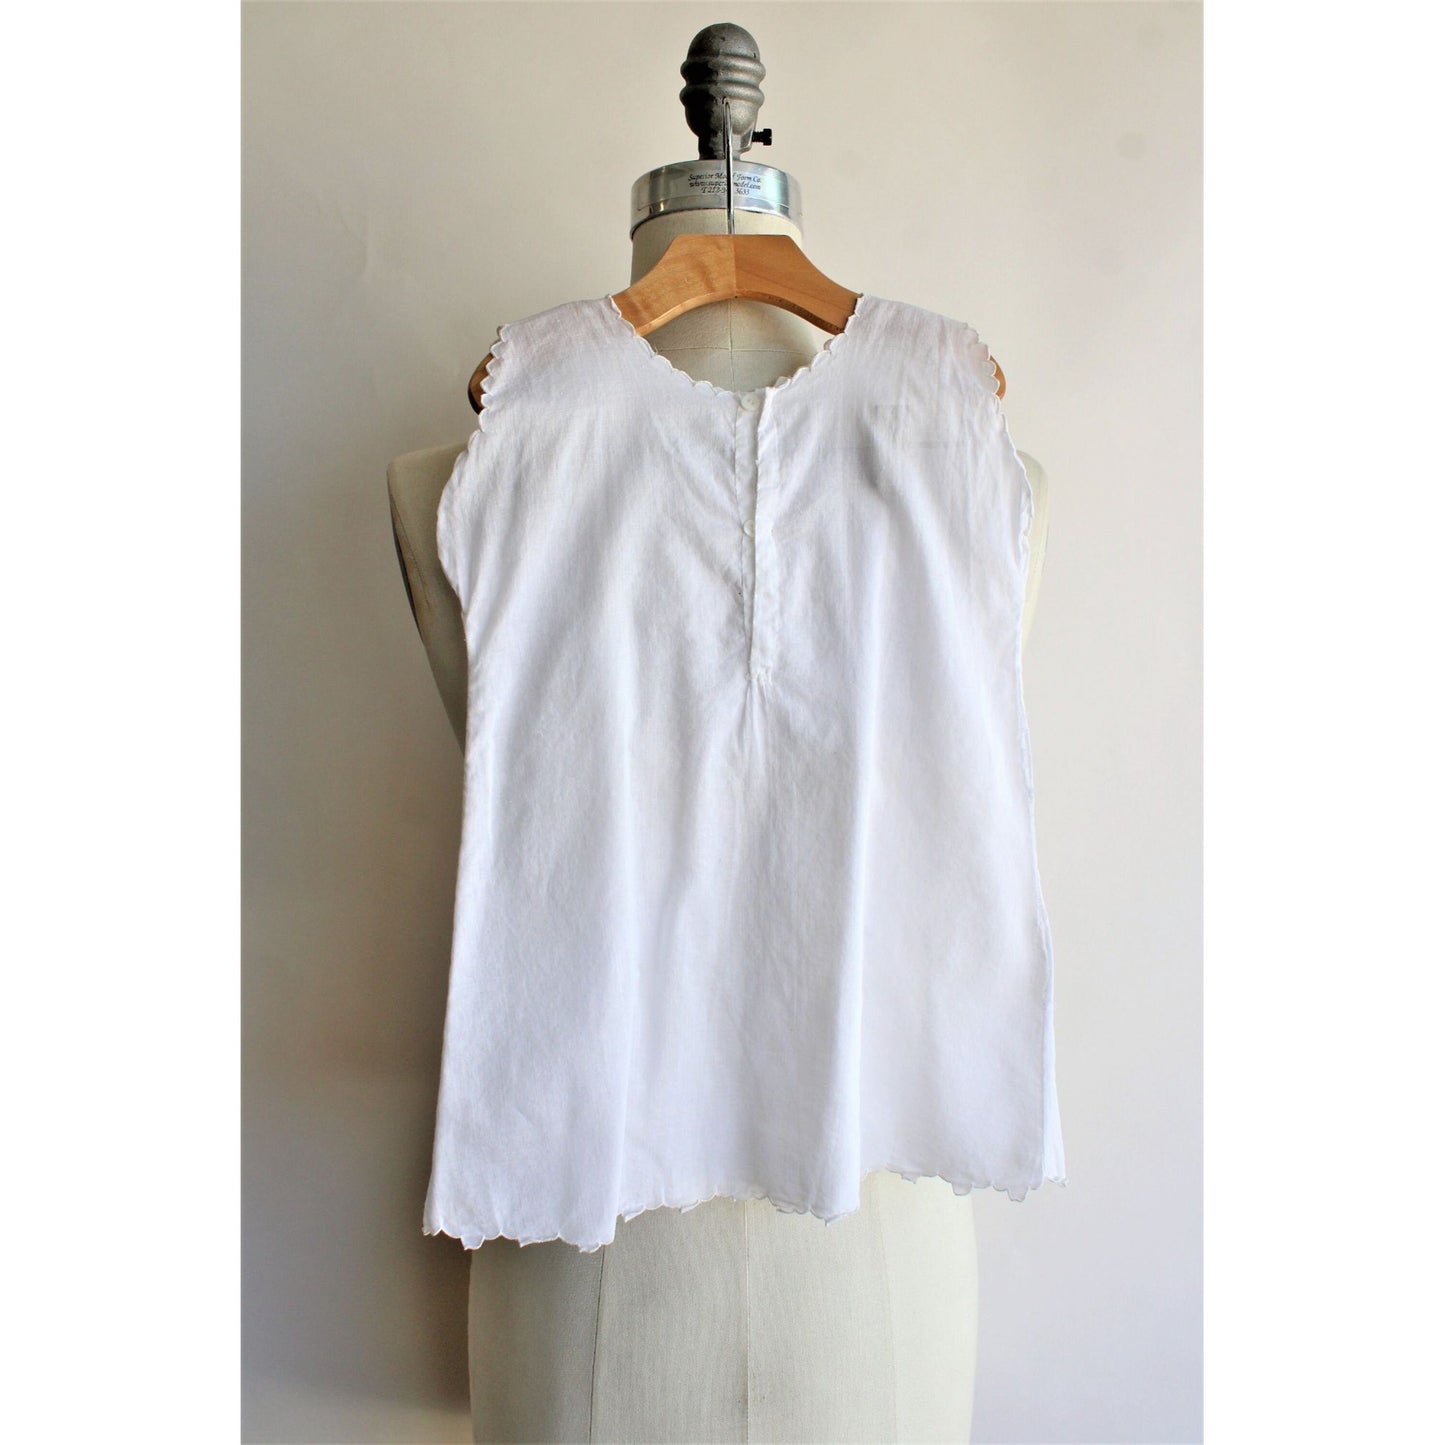 Vintage 1930s 1940s White Cotton Christening Or Baptism Dress